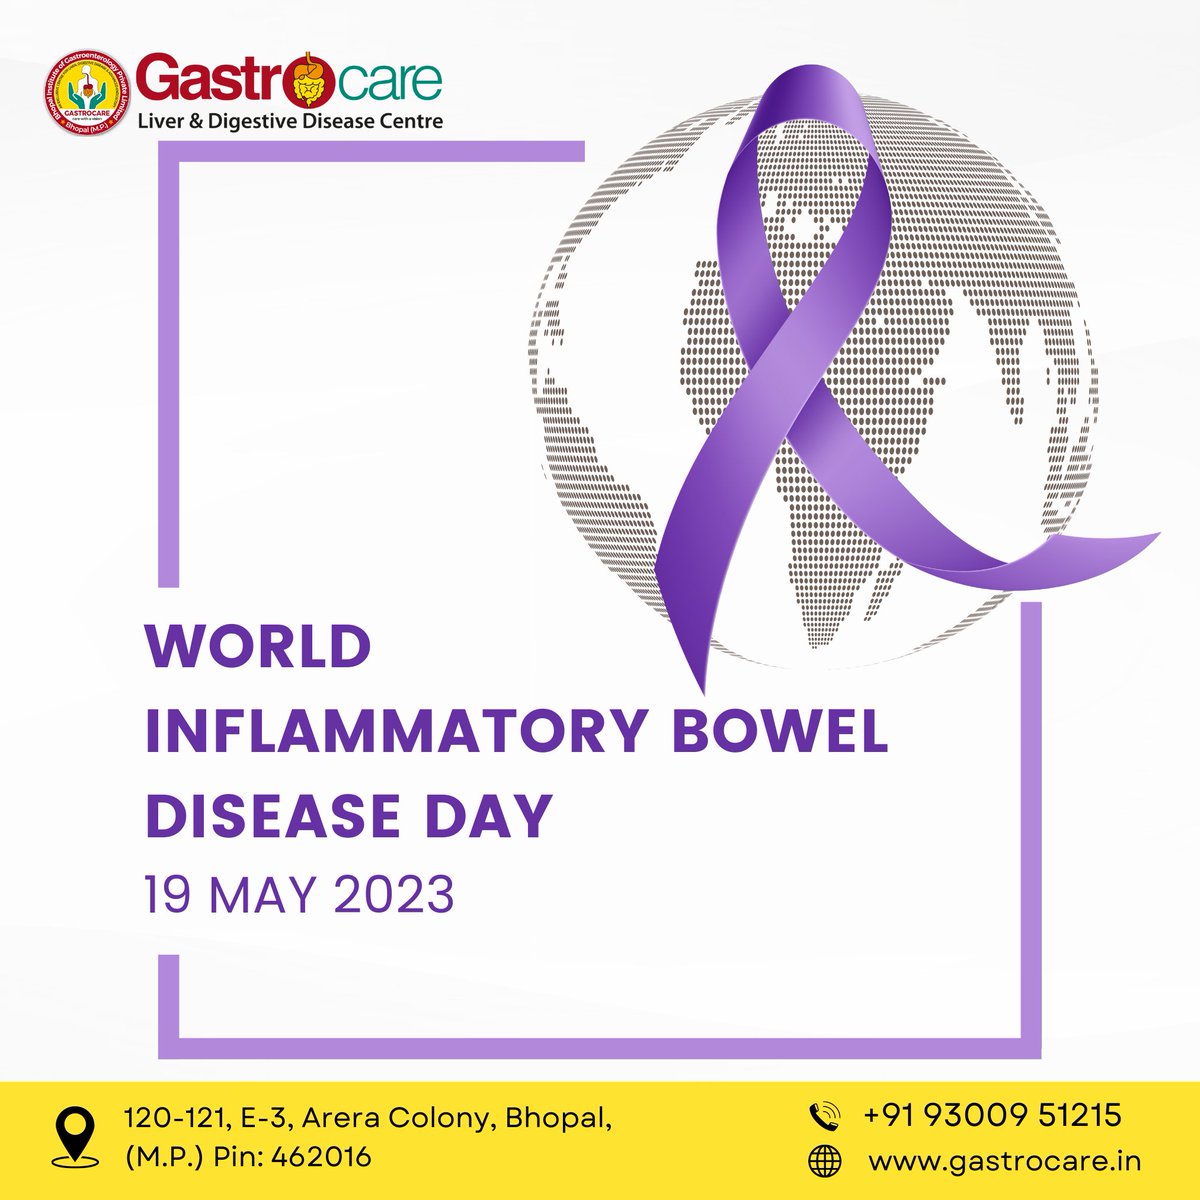 Support IBD Awareness Together
🌍🔥 Join the Fight on World Inflammatory Bowel Day! 🔥🌍 

#healthcare  #gastrocarebhopal 
#WorldIBDday #IBDAwareness #CrohnsAndColitis #ChronicIllnessWarrior #SupportAndInspire #IBDCommunity #InThisTogether #BreakTheSilence #HopeAndChange